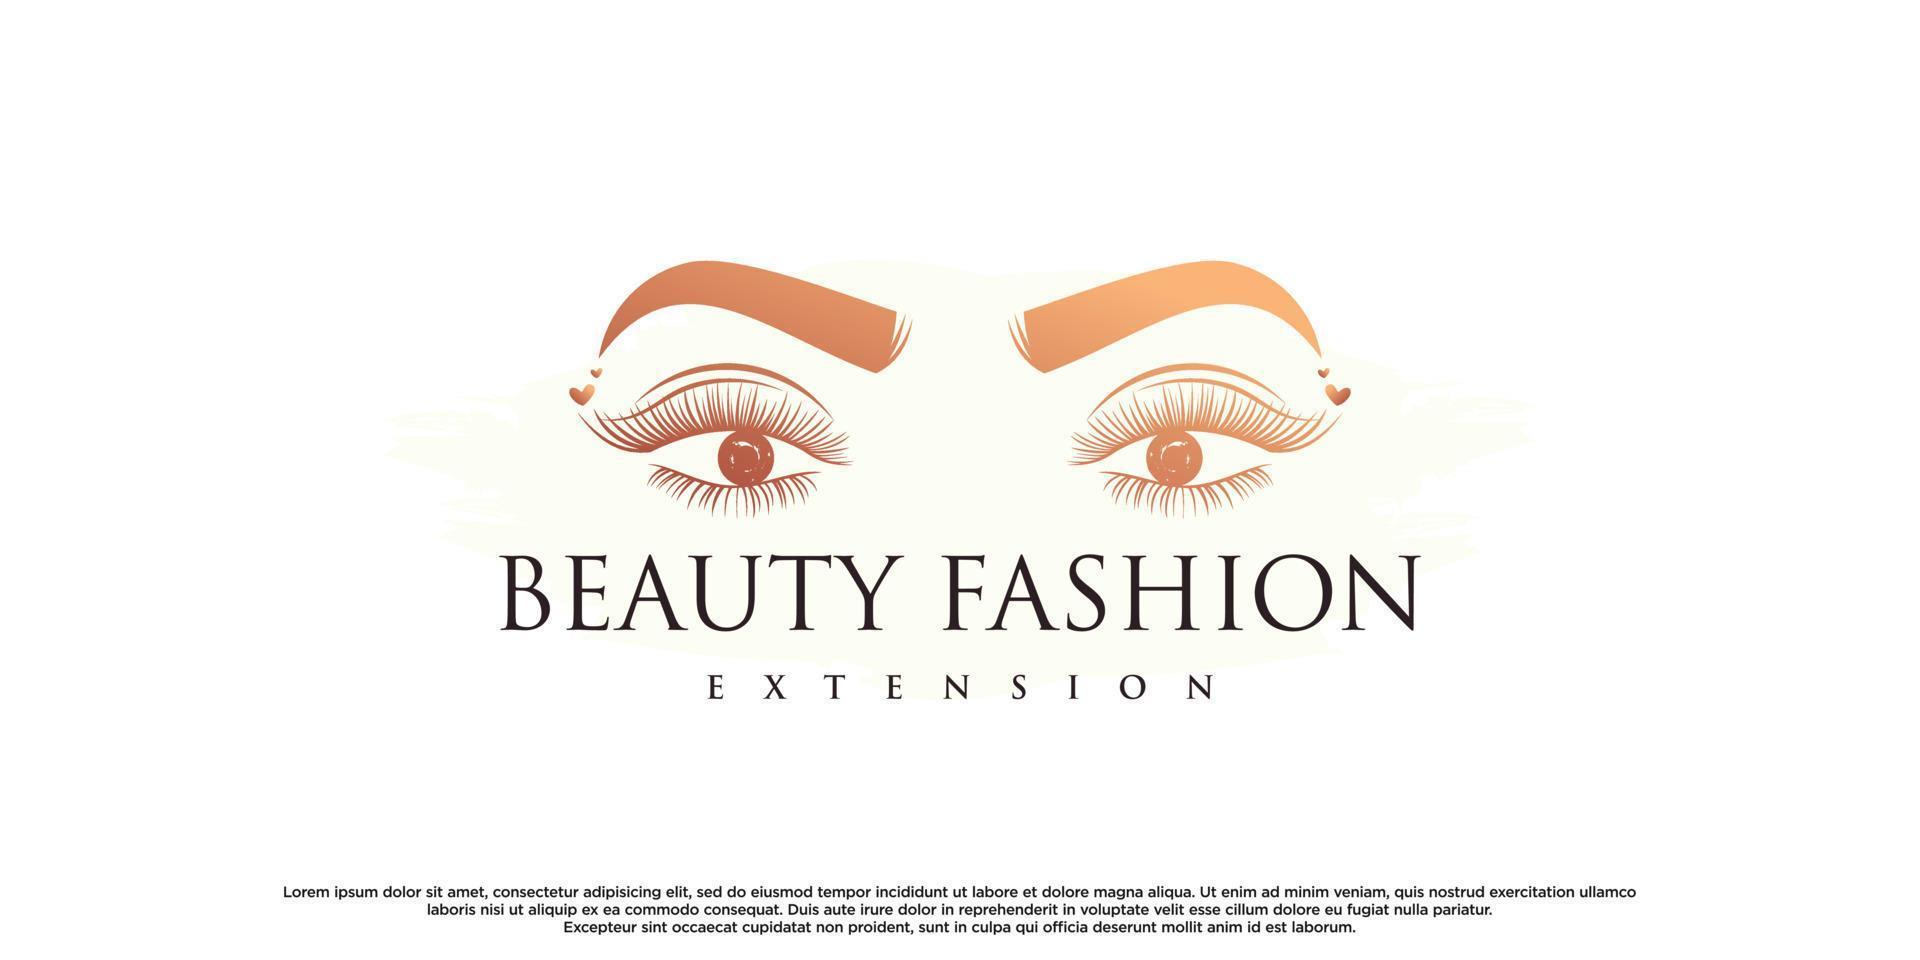 Beauty eyelash extension logo design with creative element Premium Vector